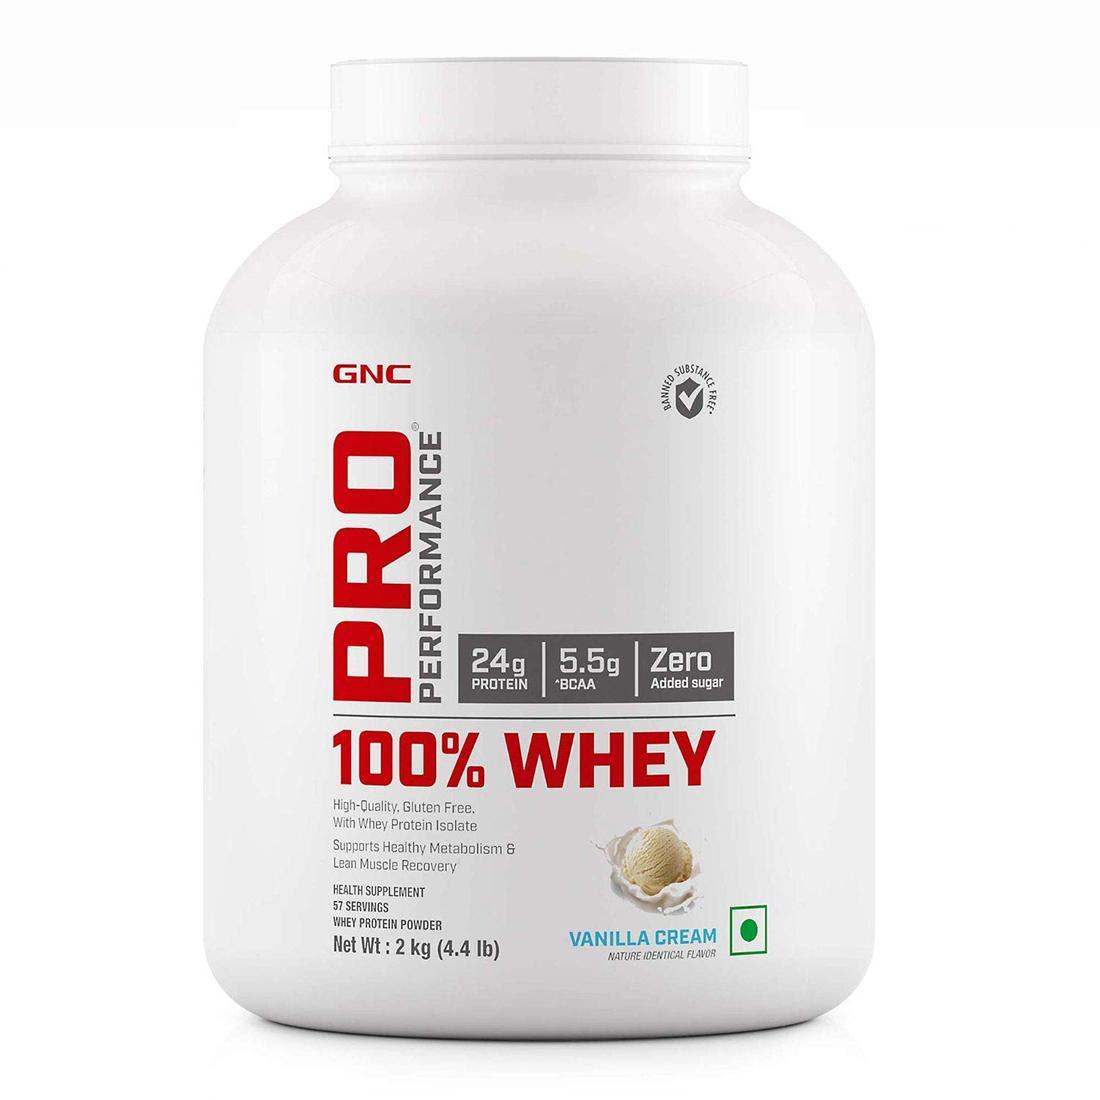 GNC Pro Performance 100% Whey Protein 4lbs